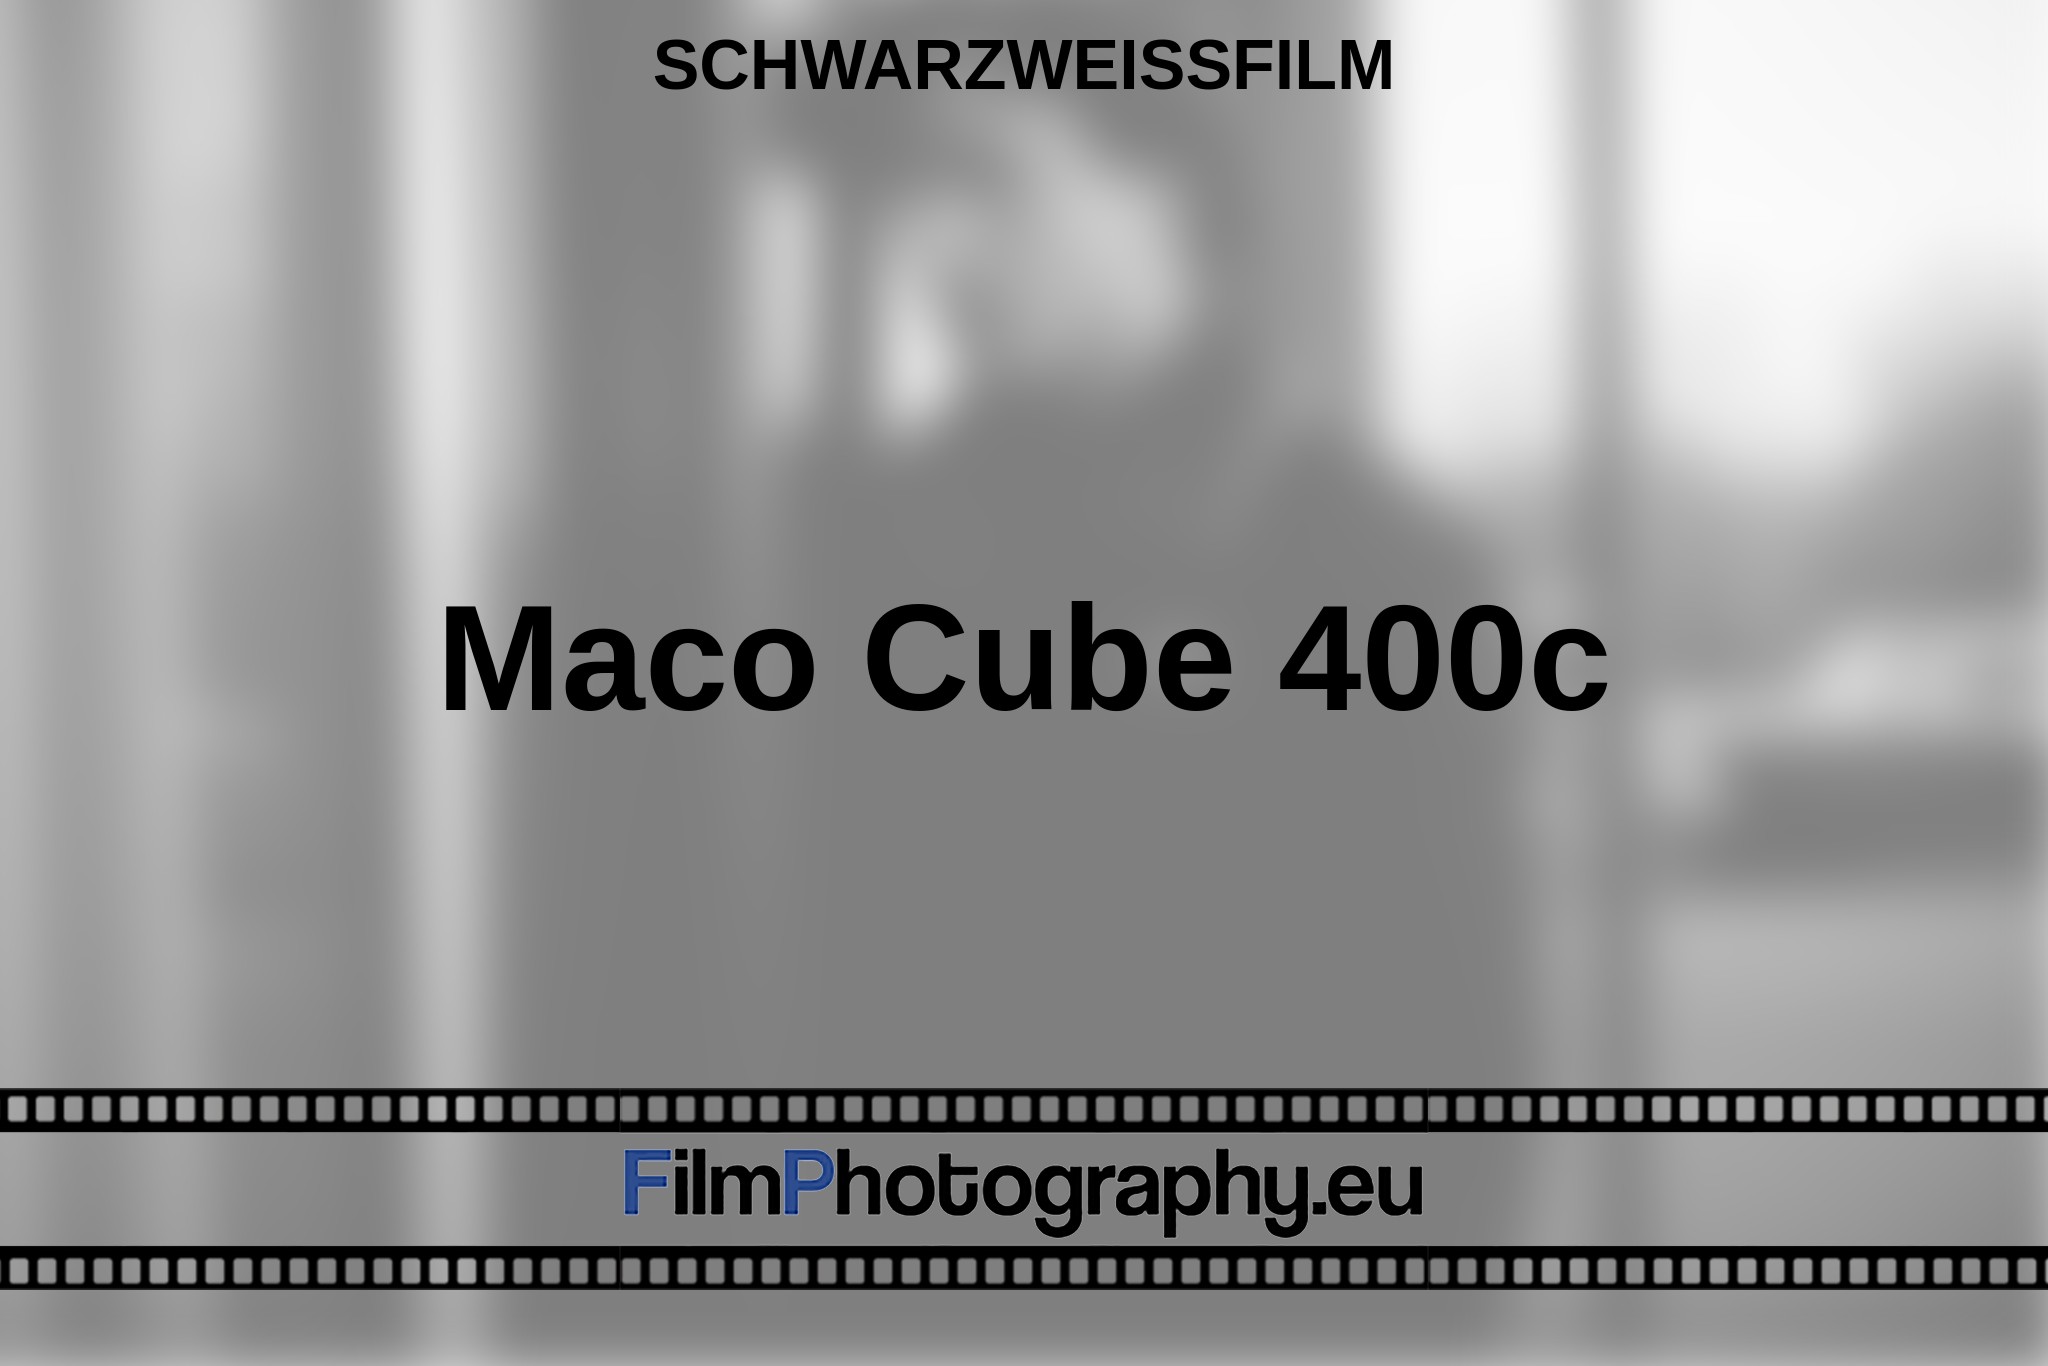 maco-cube-400c-schwarzweißfilm-bnv.jpg